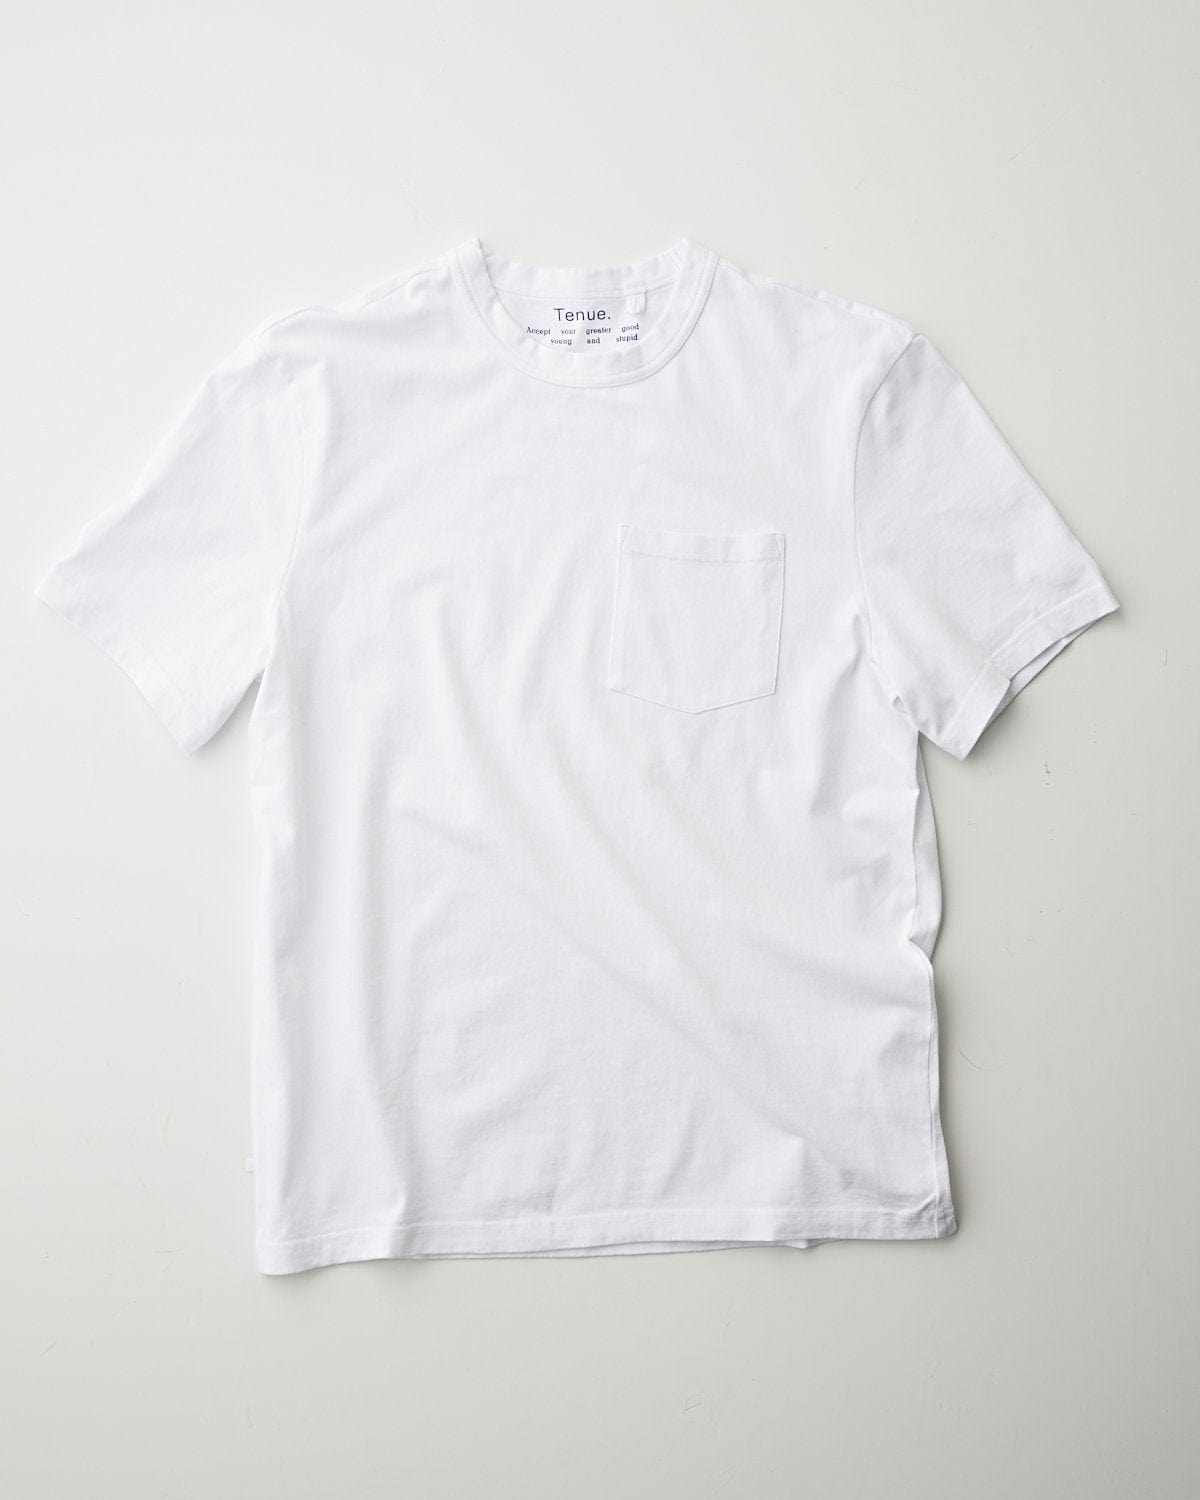 Tenue. 2-Pack John Black & White T-shirt S/S Men